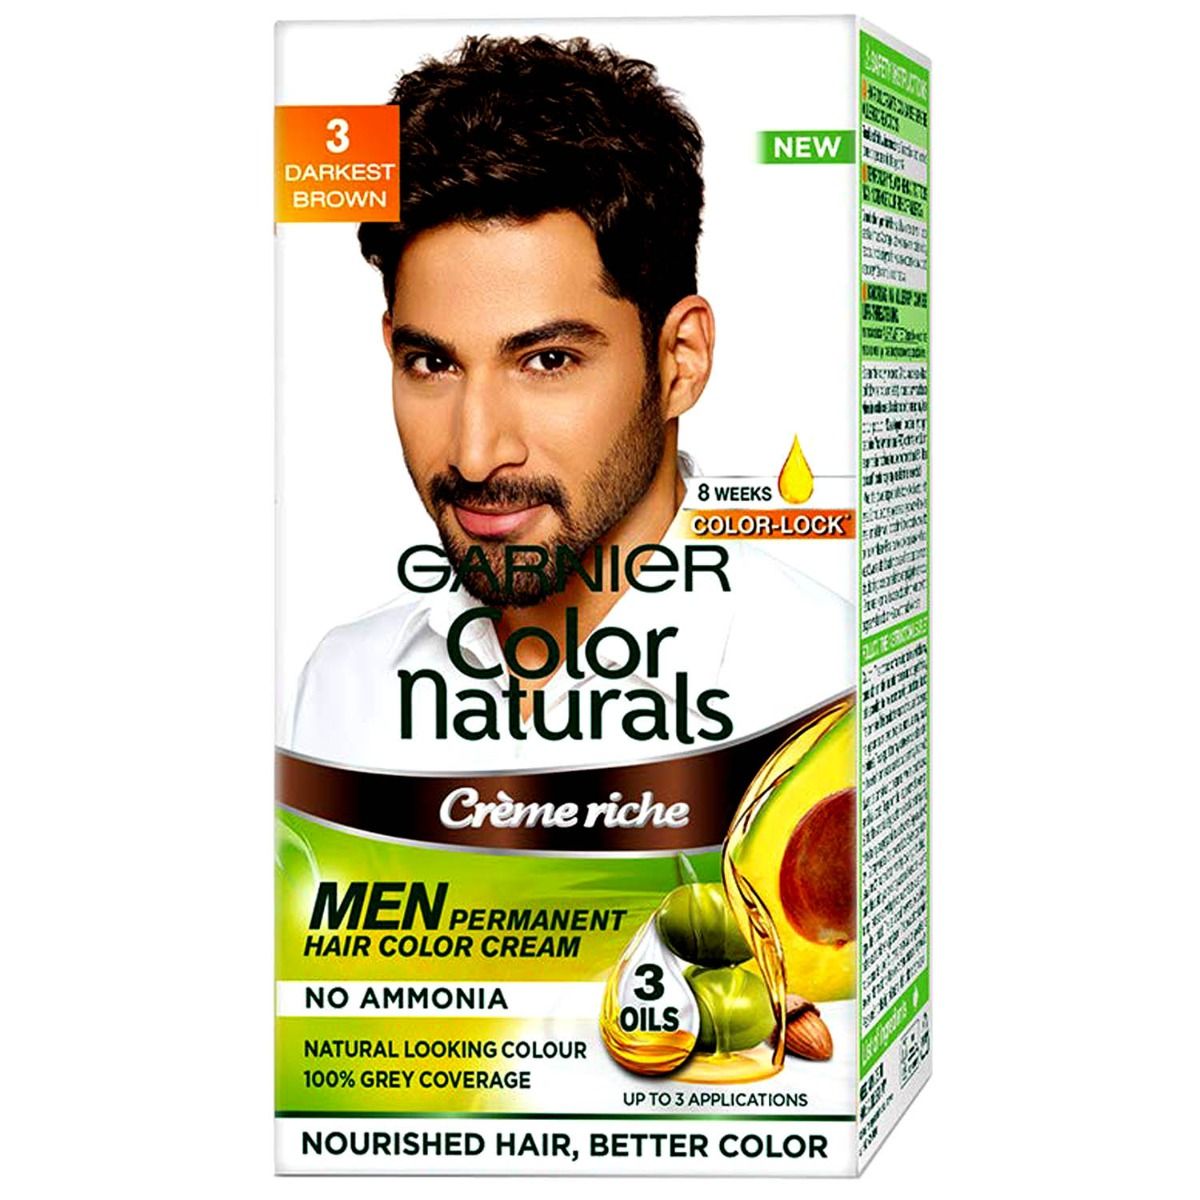 Garnier Colour Naturals Crème Riche Men Hair Cream Shade 3, Darkest Brown, 30 ml+ 30 gm Price, Uses, Side Composition Apollo Pharmacy